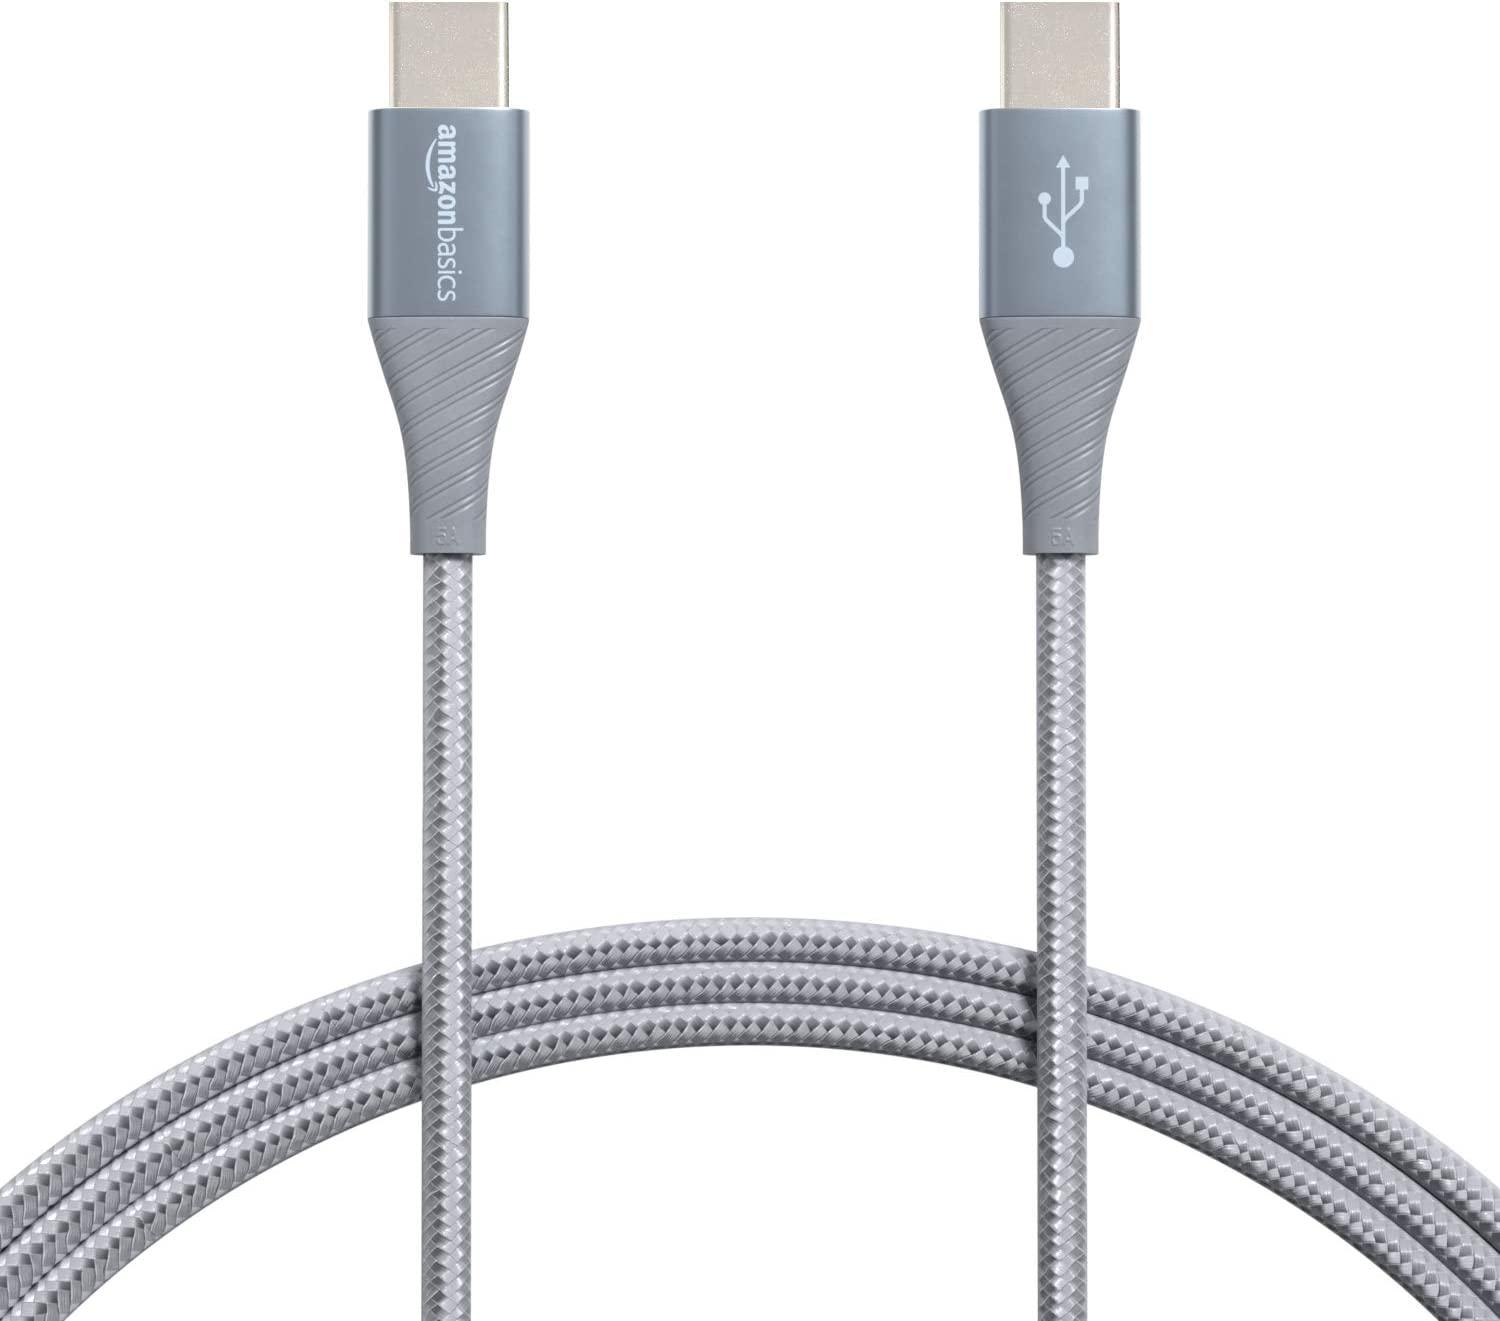 Amazon Basics Aluminum Braided USB-C Fast Charging Cable for $6.67